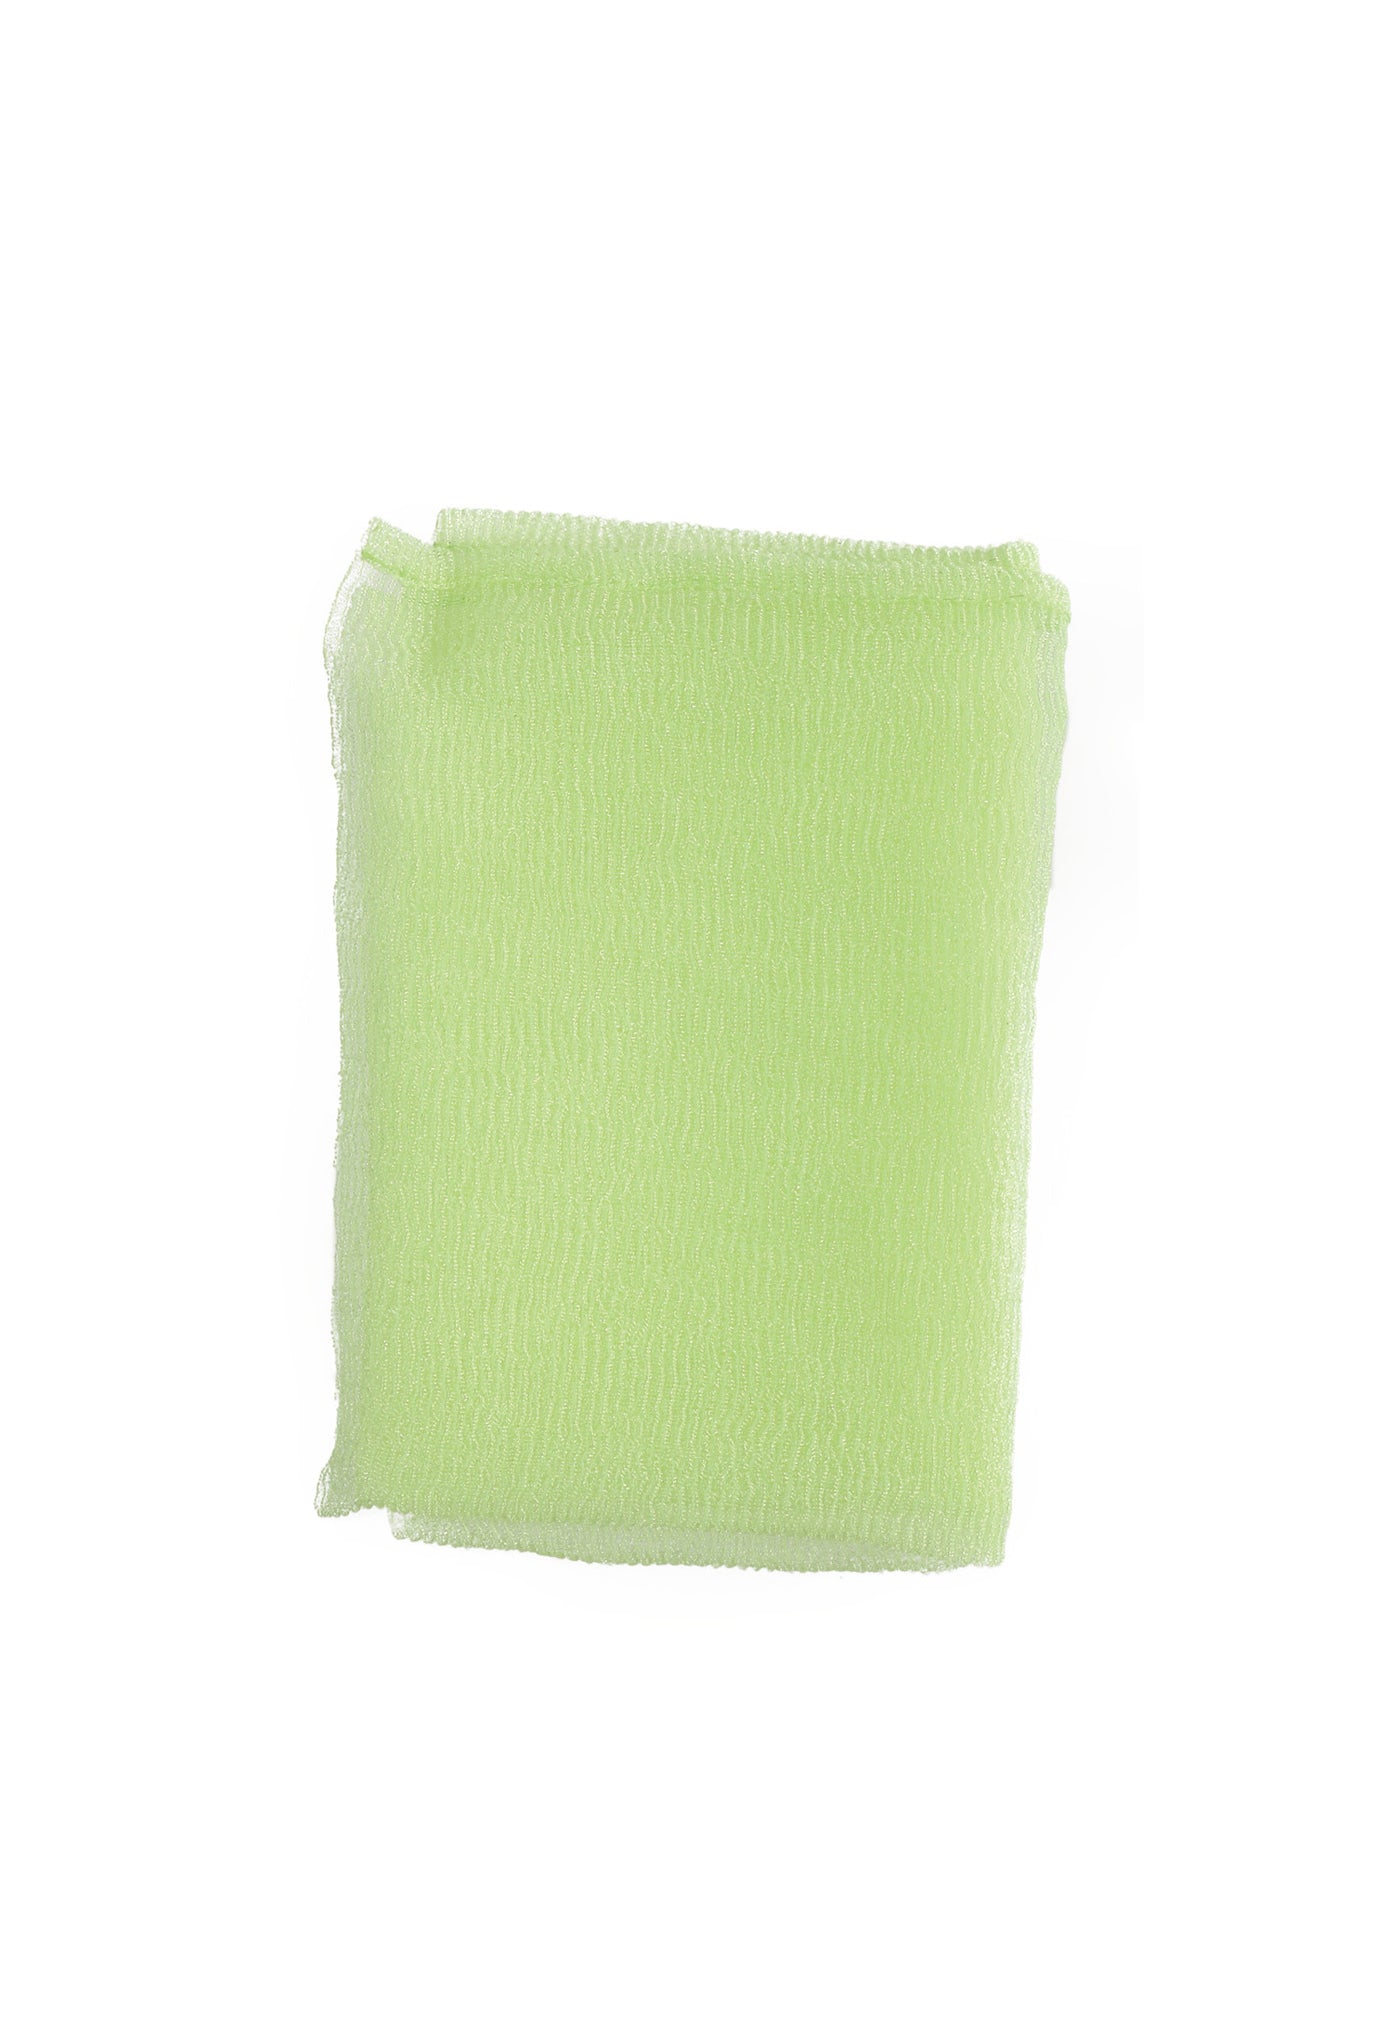 Exfoliating Shower Towel (Green)